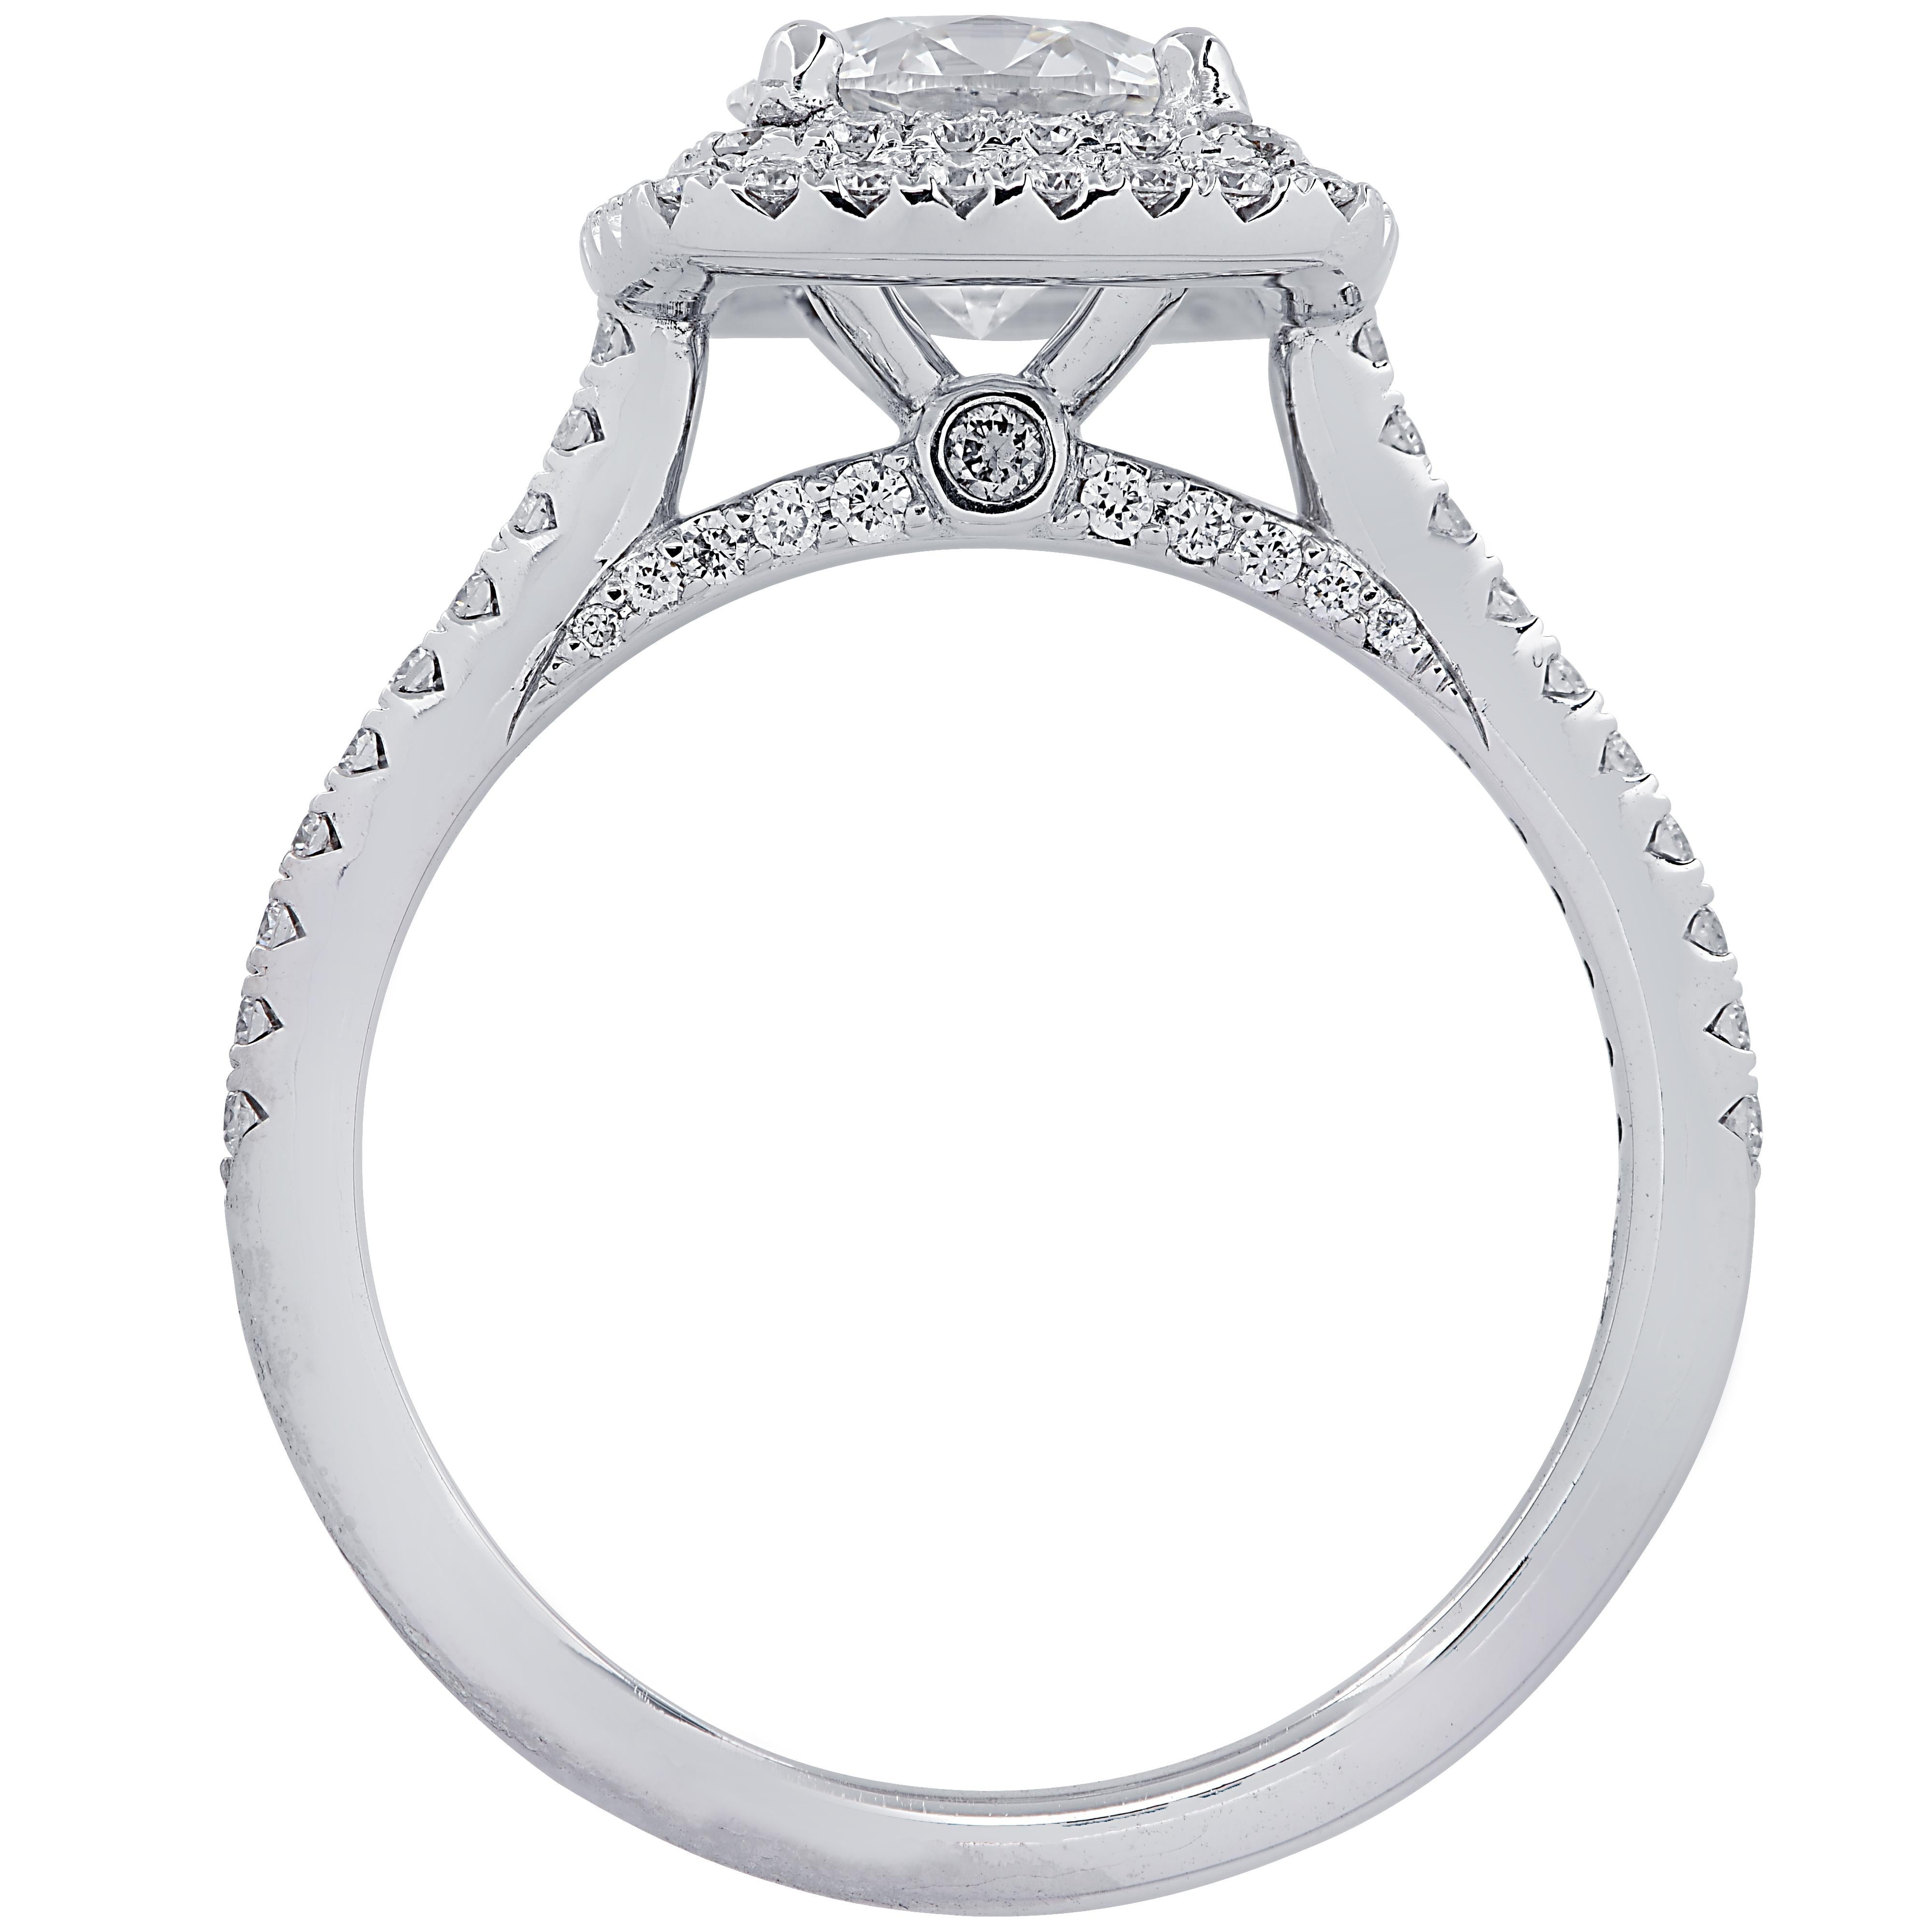 1.27 carat diamond ring